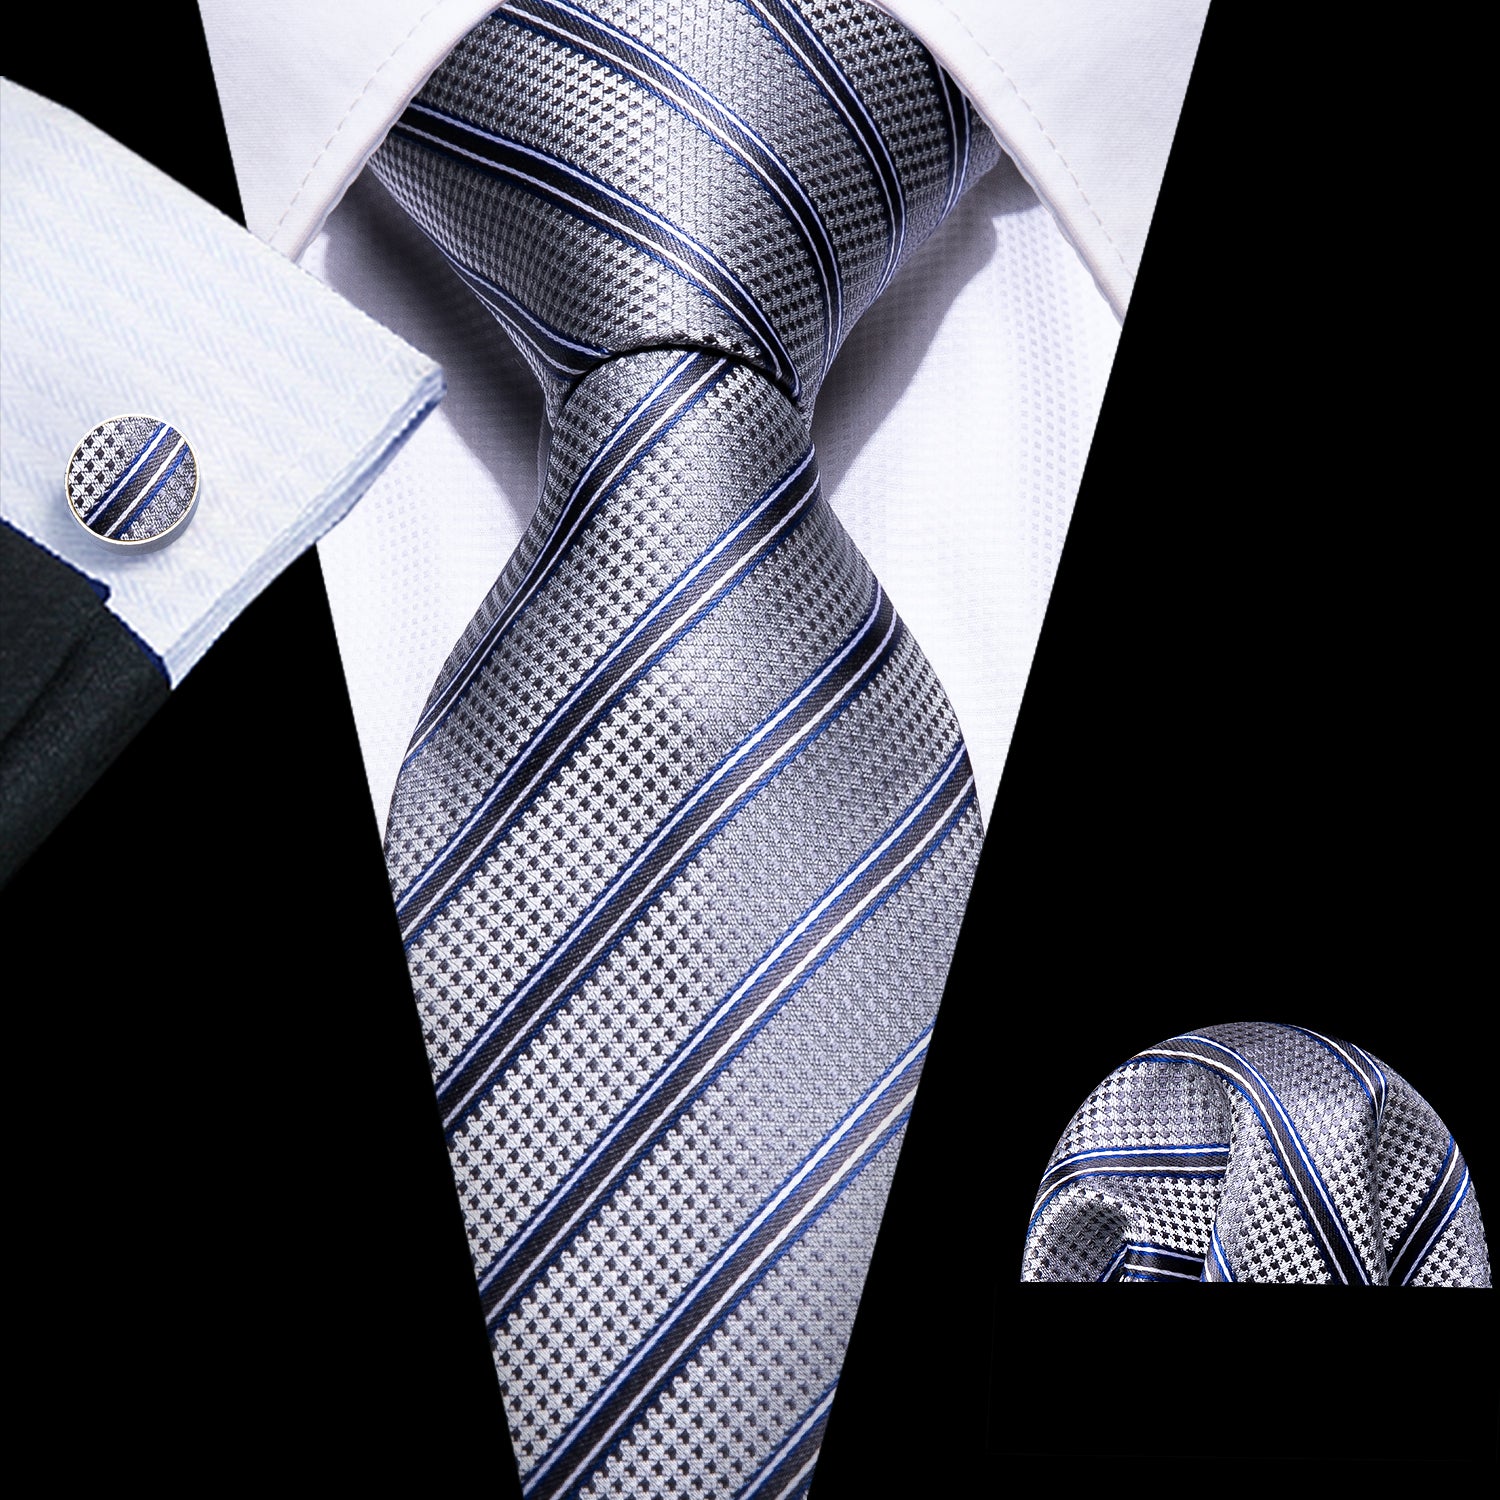 4PCS Grey Blue Striped Silk Necktie Hanky Cufflinks Tie Clip Set